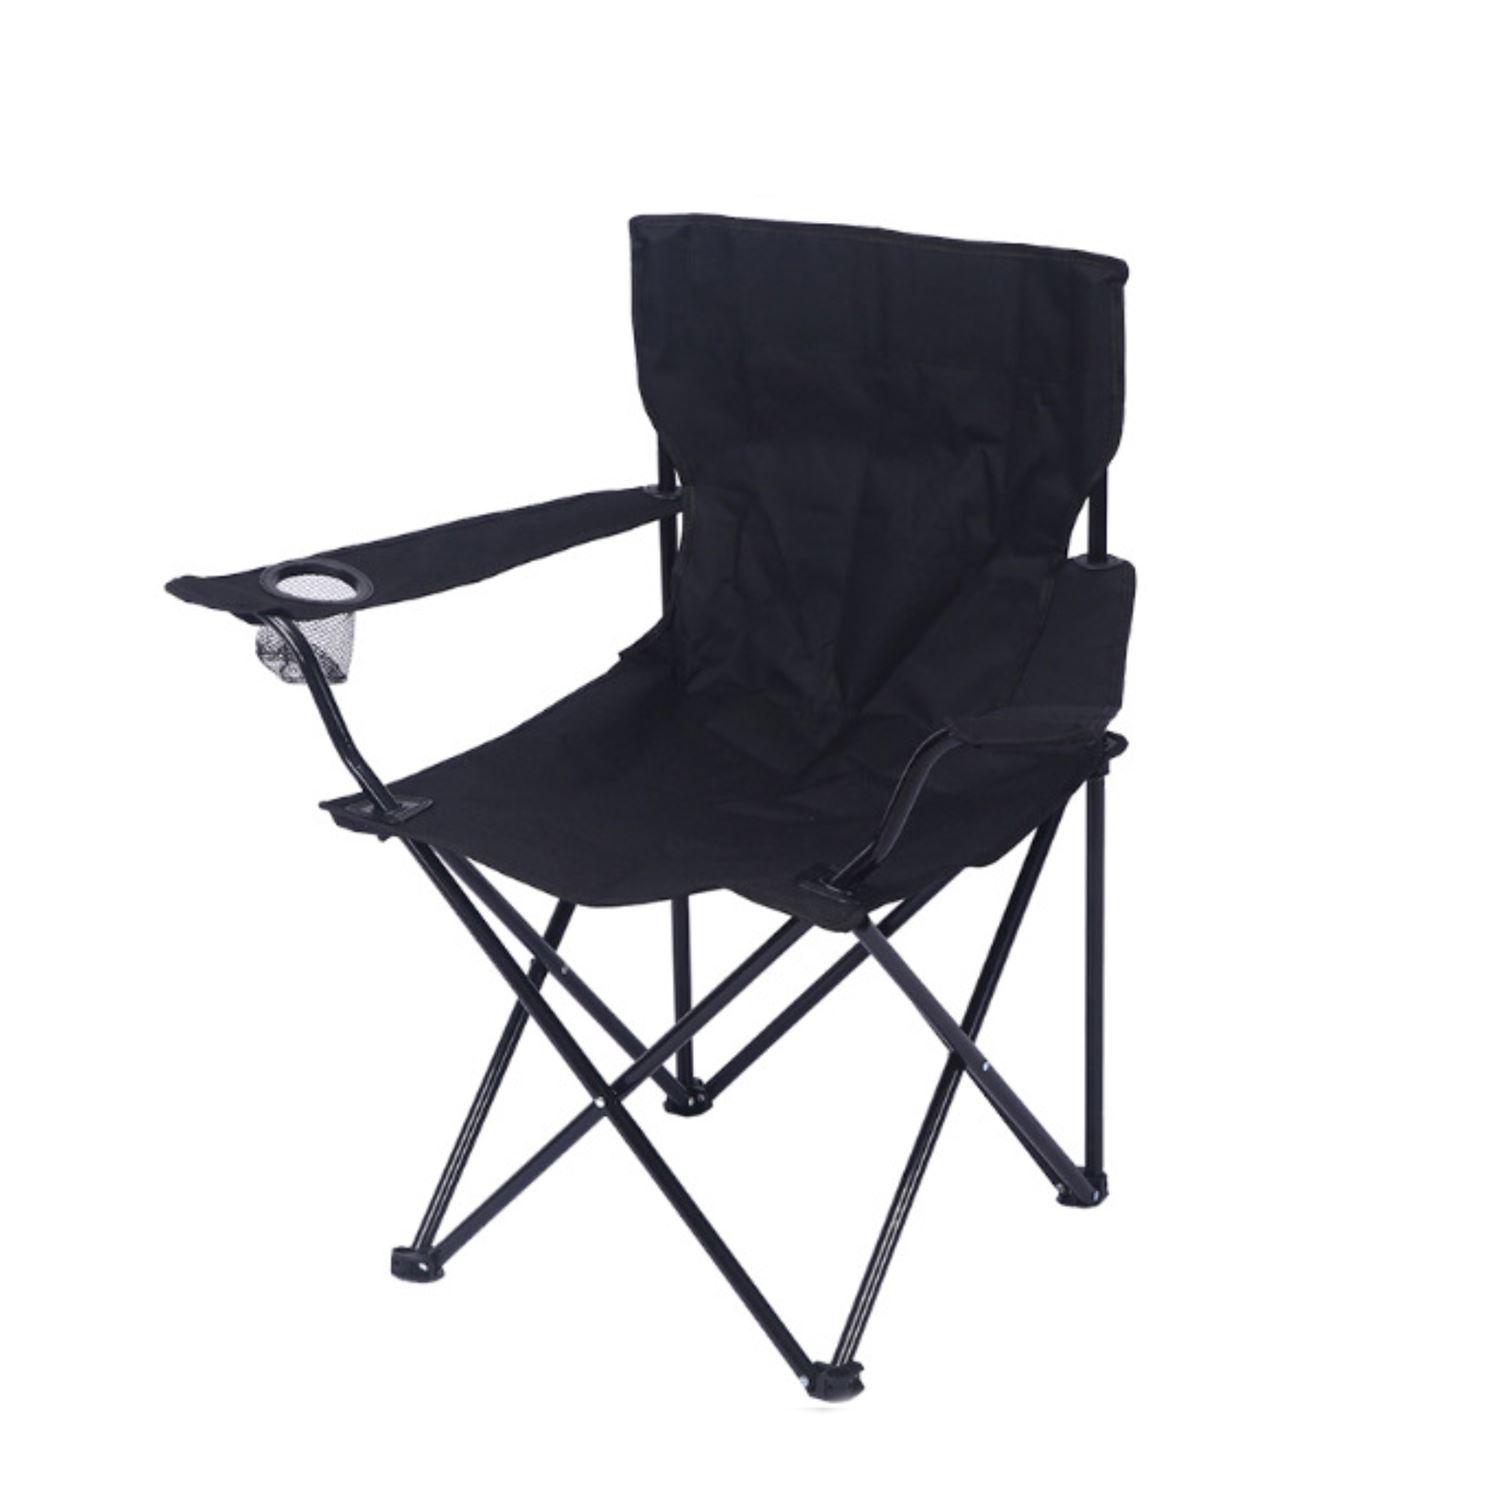 Folding Tourist Fishing Chair - Black Color